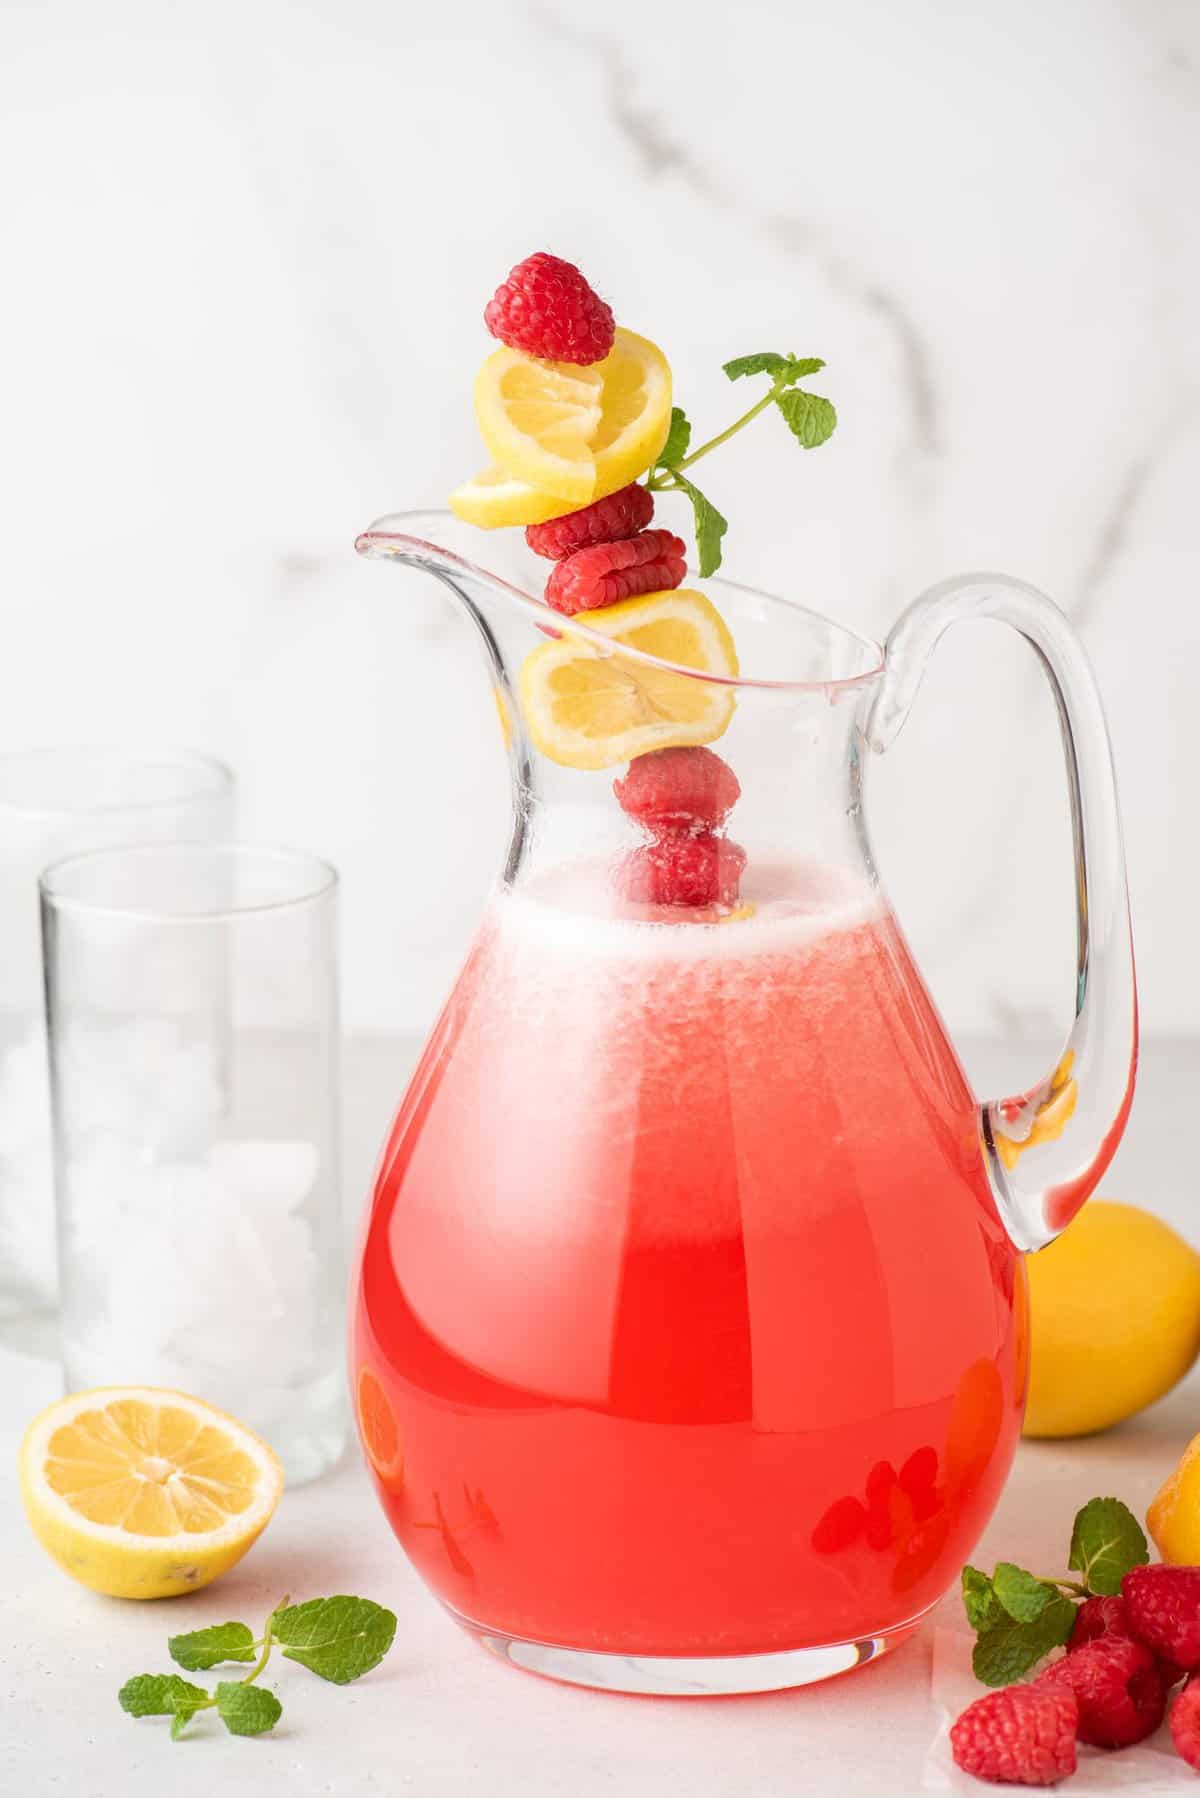 Pitcher of raspberry lemonade garnished with skewer of raspberries, lemon slices, and sprig of mint